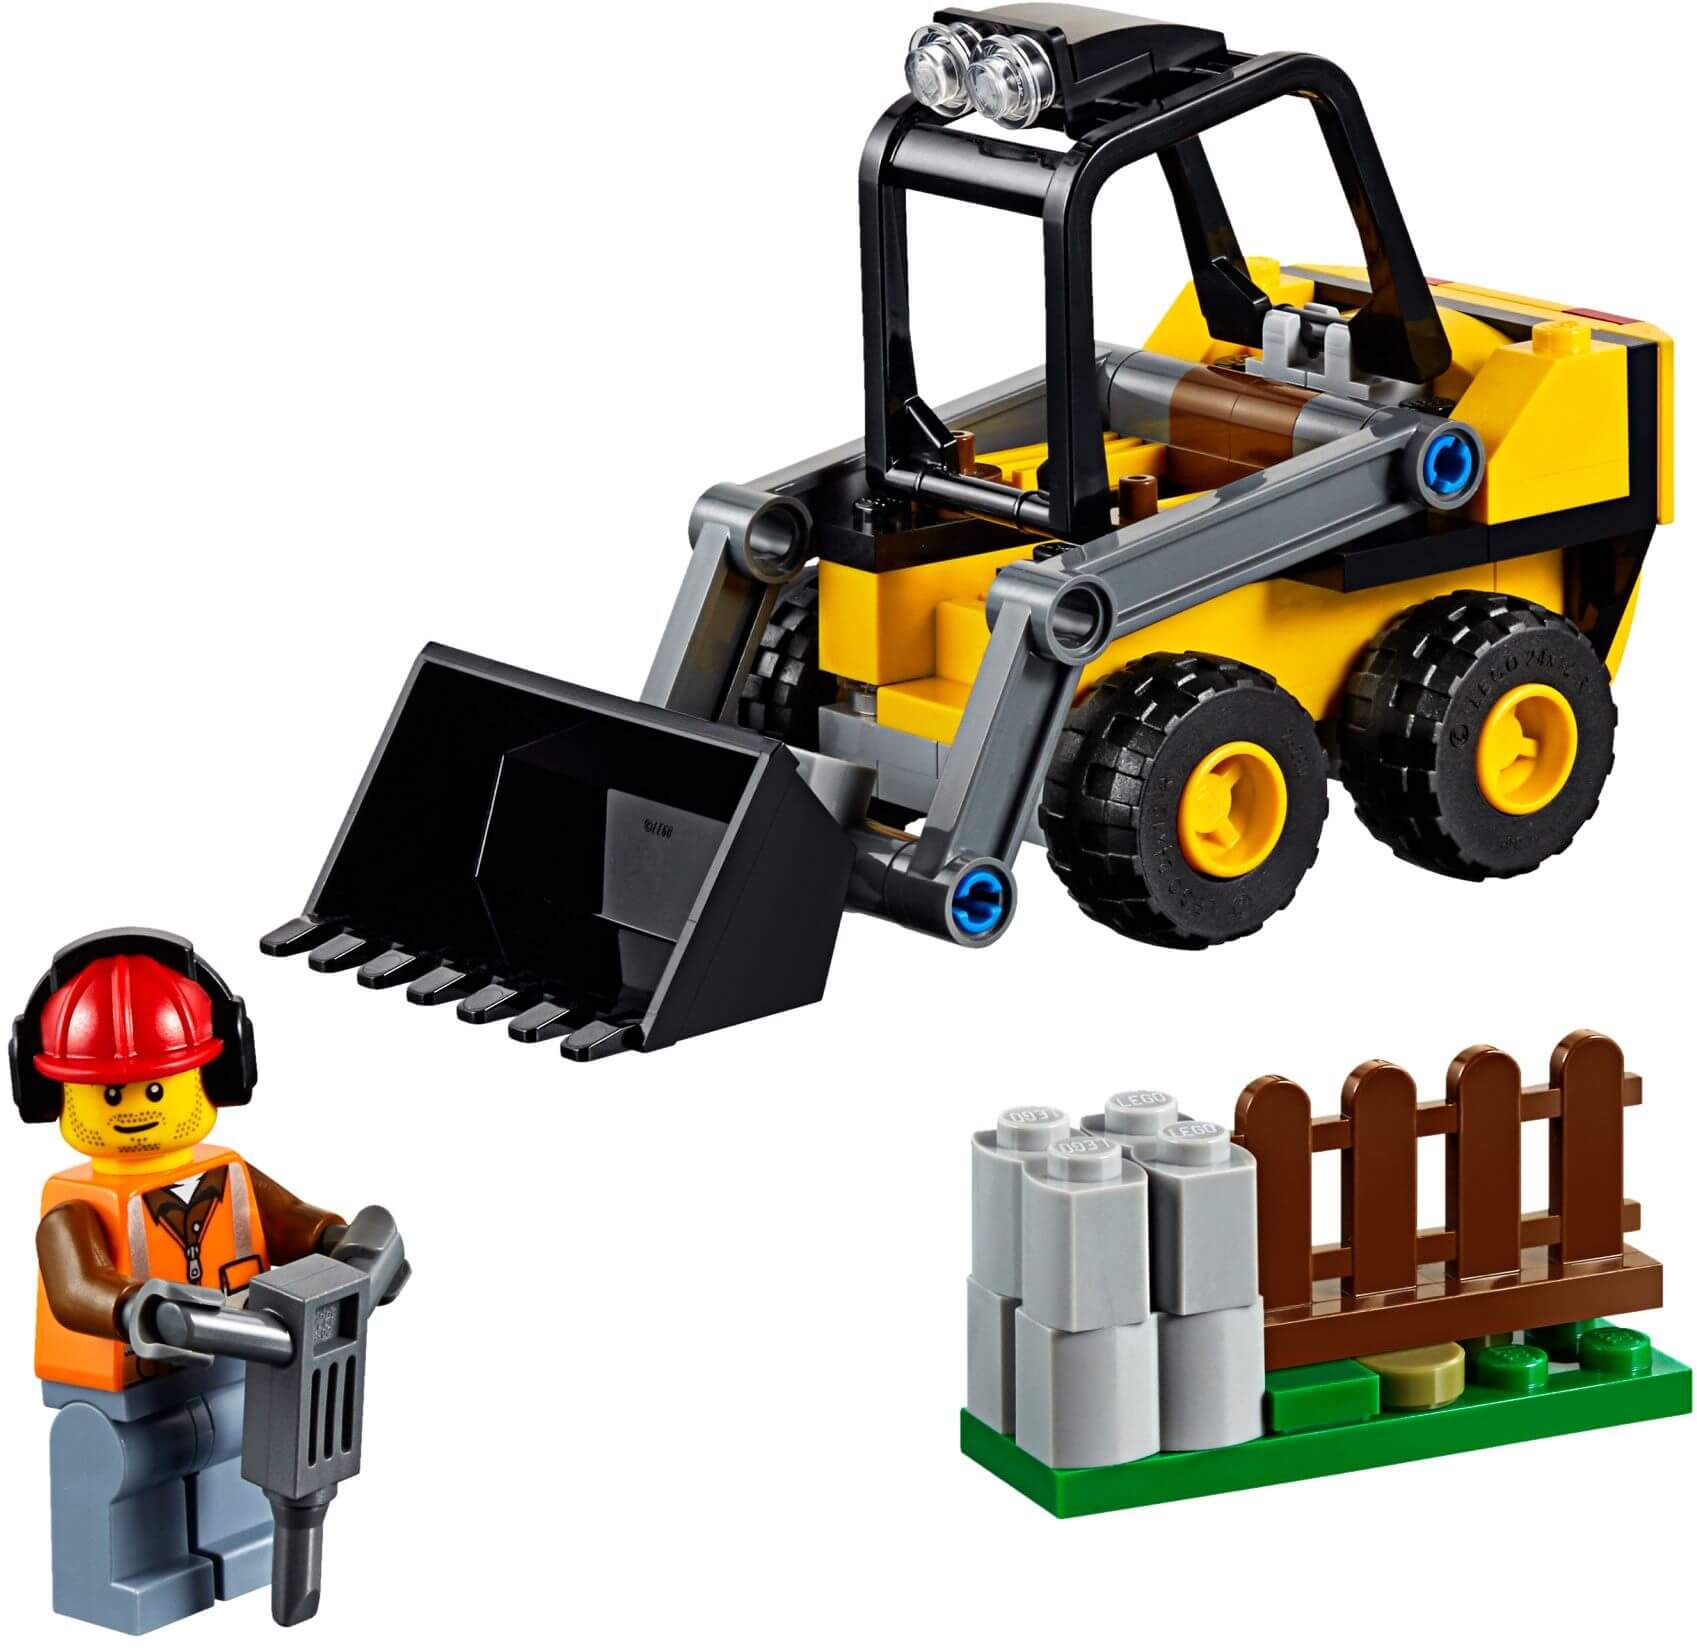 Retrocargadora construcción ( Lego 60219 ) imagen a